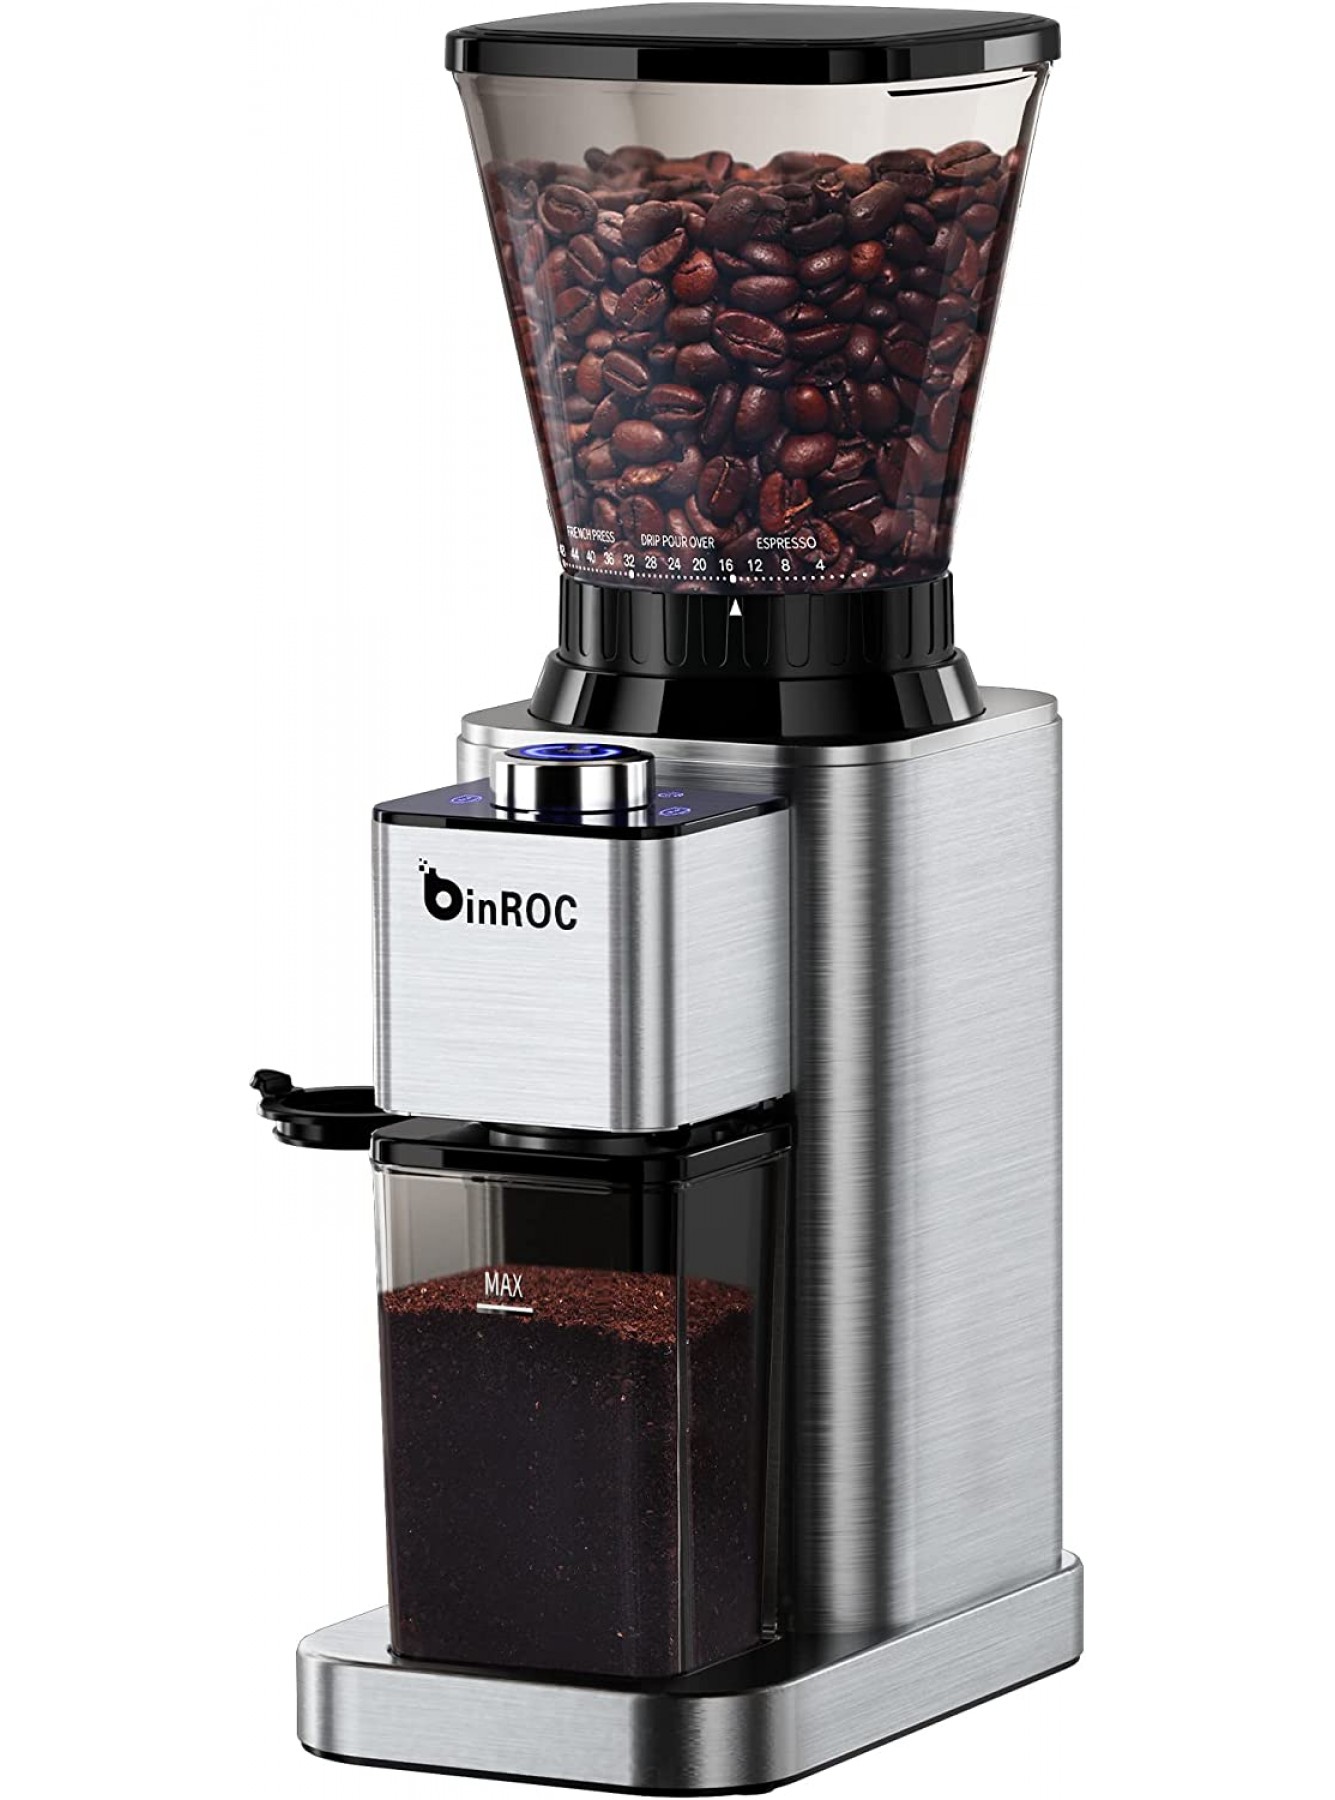 https://www.instagramscraperapi.com/image/cache/data/category_78/anti-static-conical-burr-coffee-grinder-with-48-grind-settings-binroc-adjustable-bur-3925-1335x1800.jpg